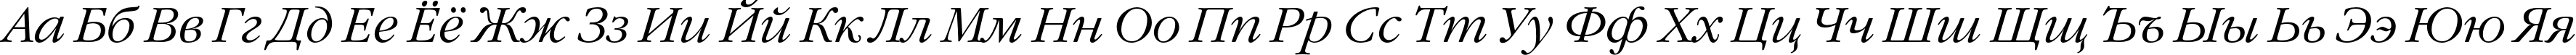 Пример написания русского алфавита шрифтом GaramondC Italic